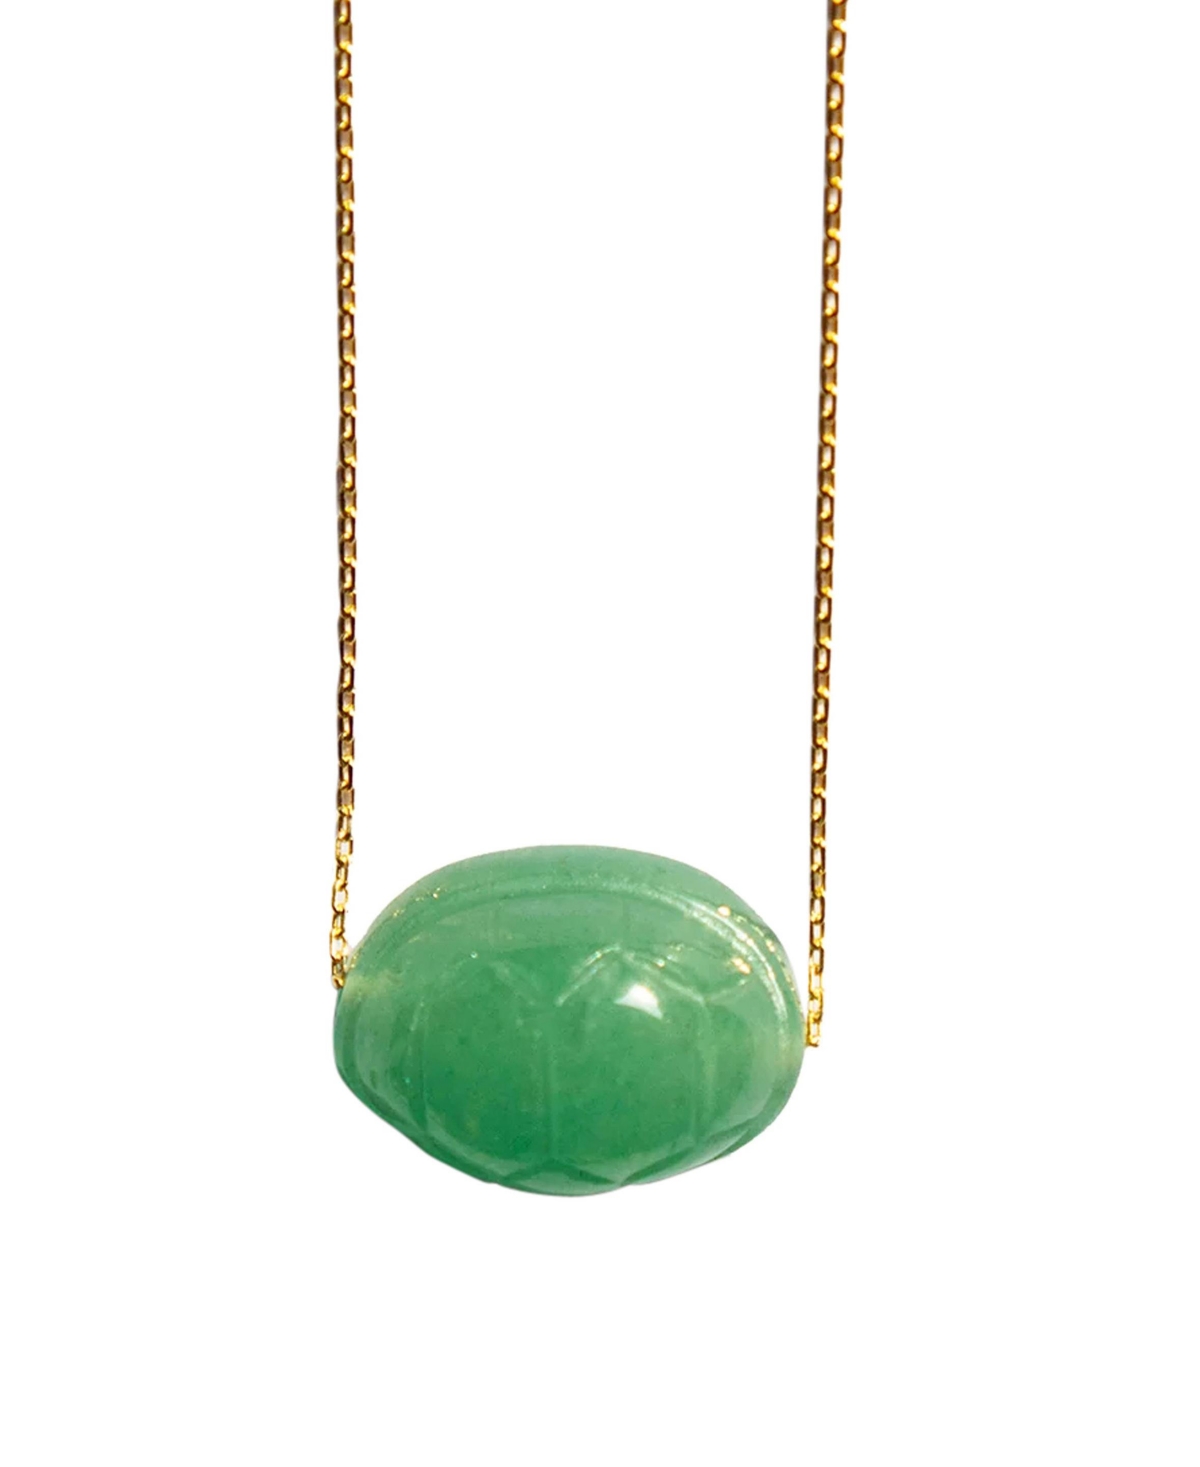 Turtur - Jade stone pendant necklace - Green